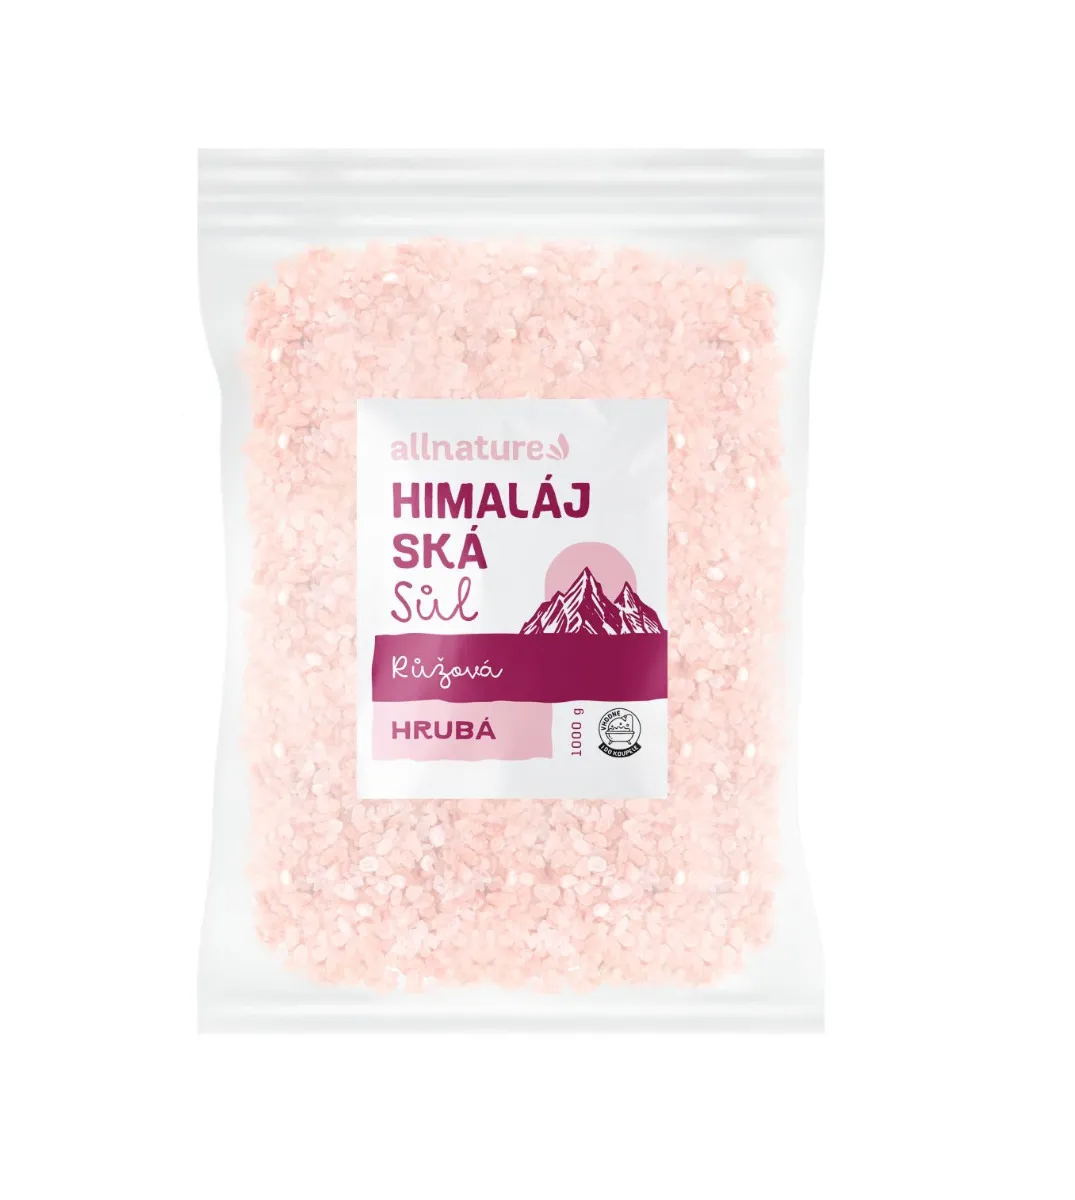 Allnature Himalájská sůl růžová hrubá 1000 g